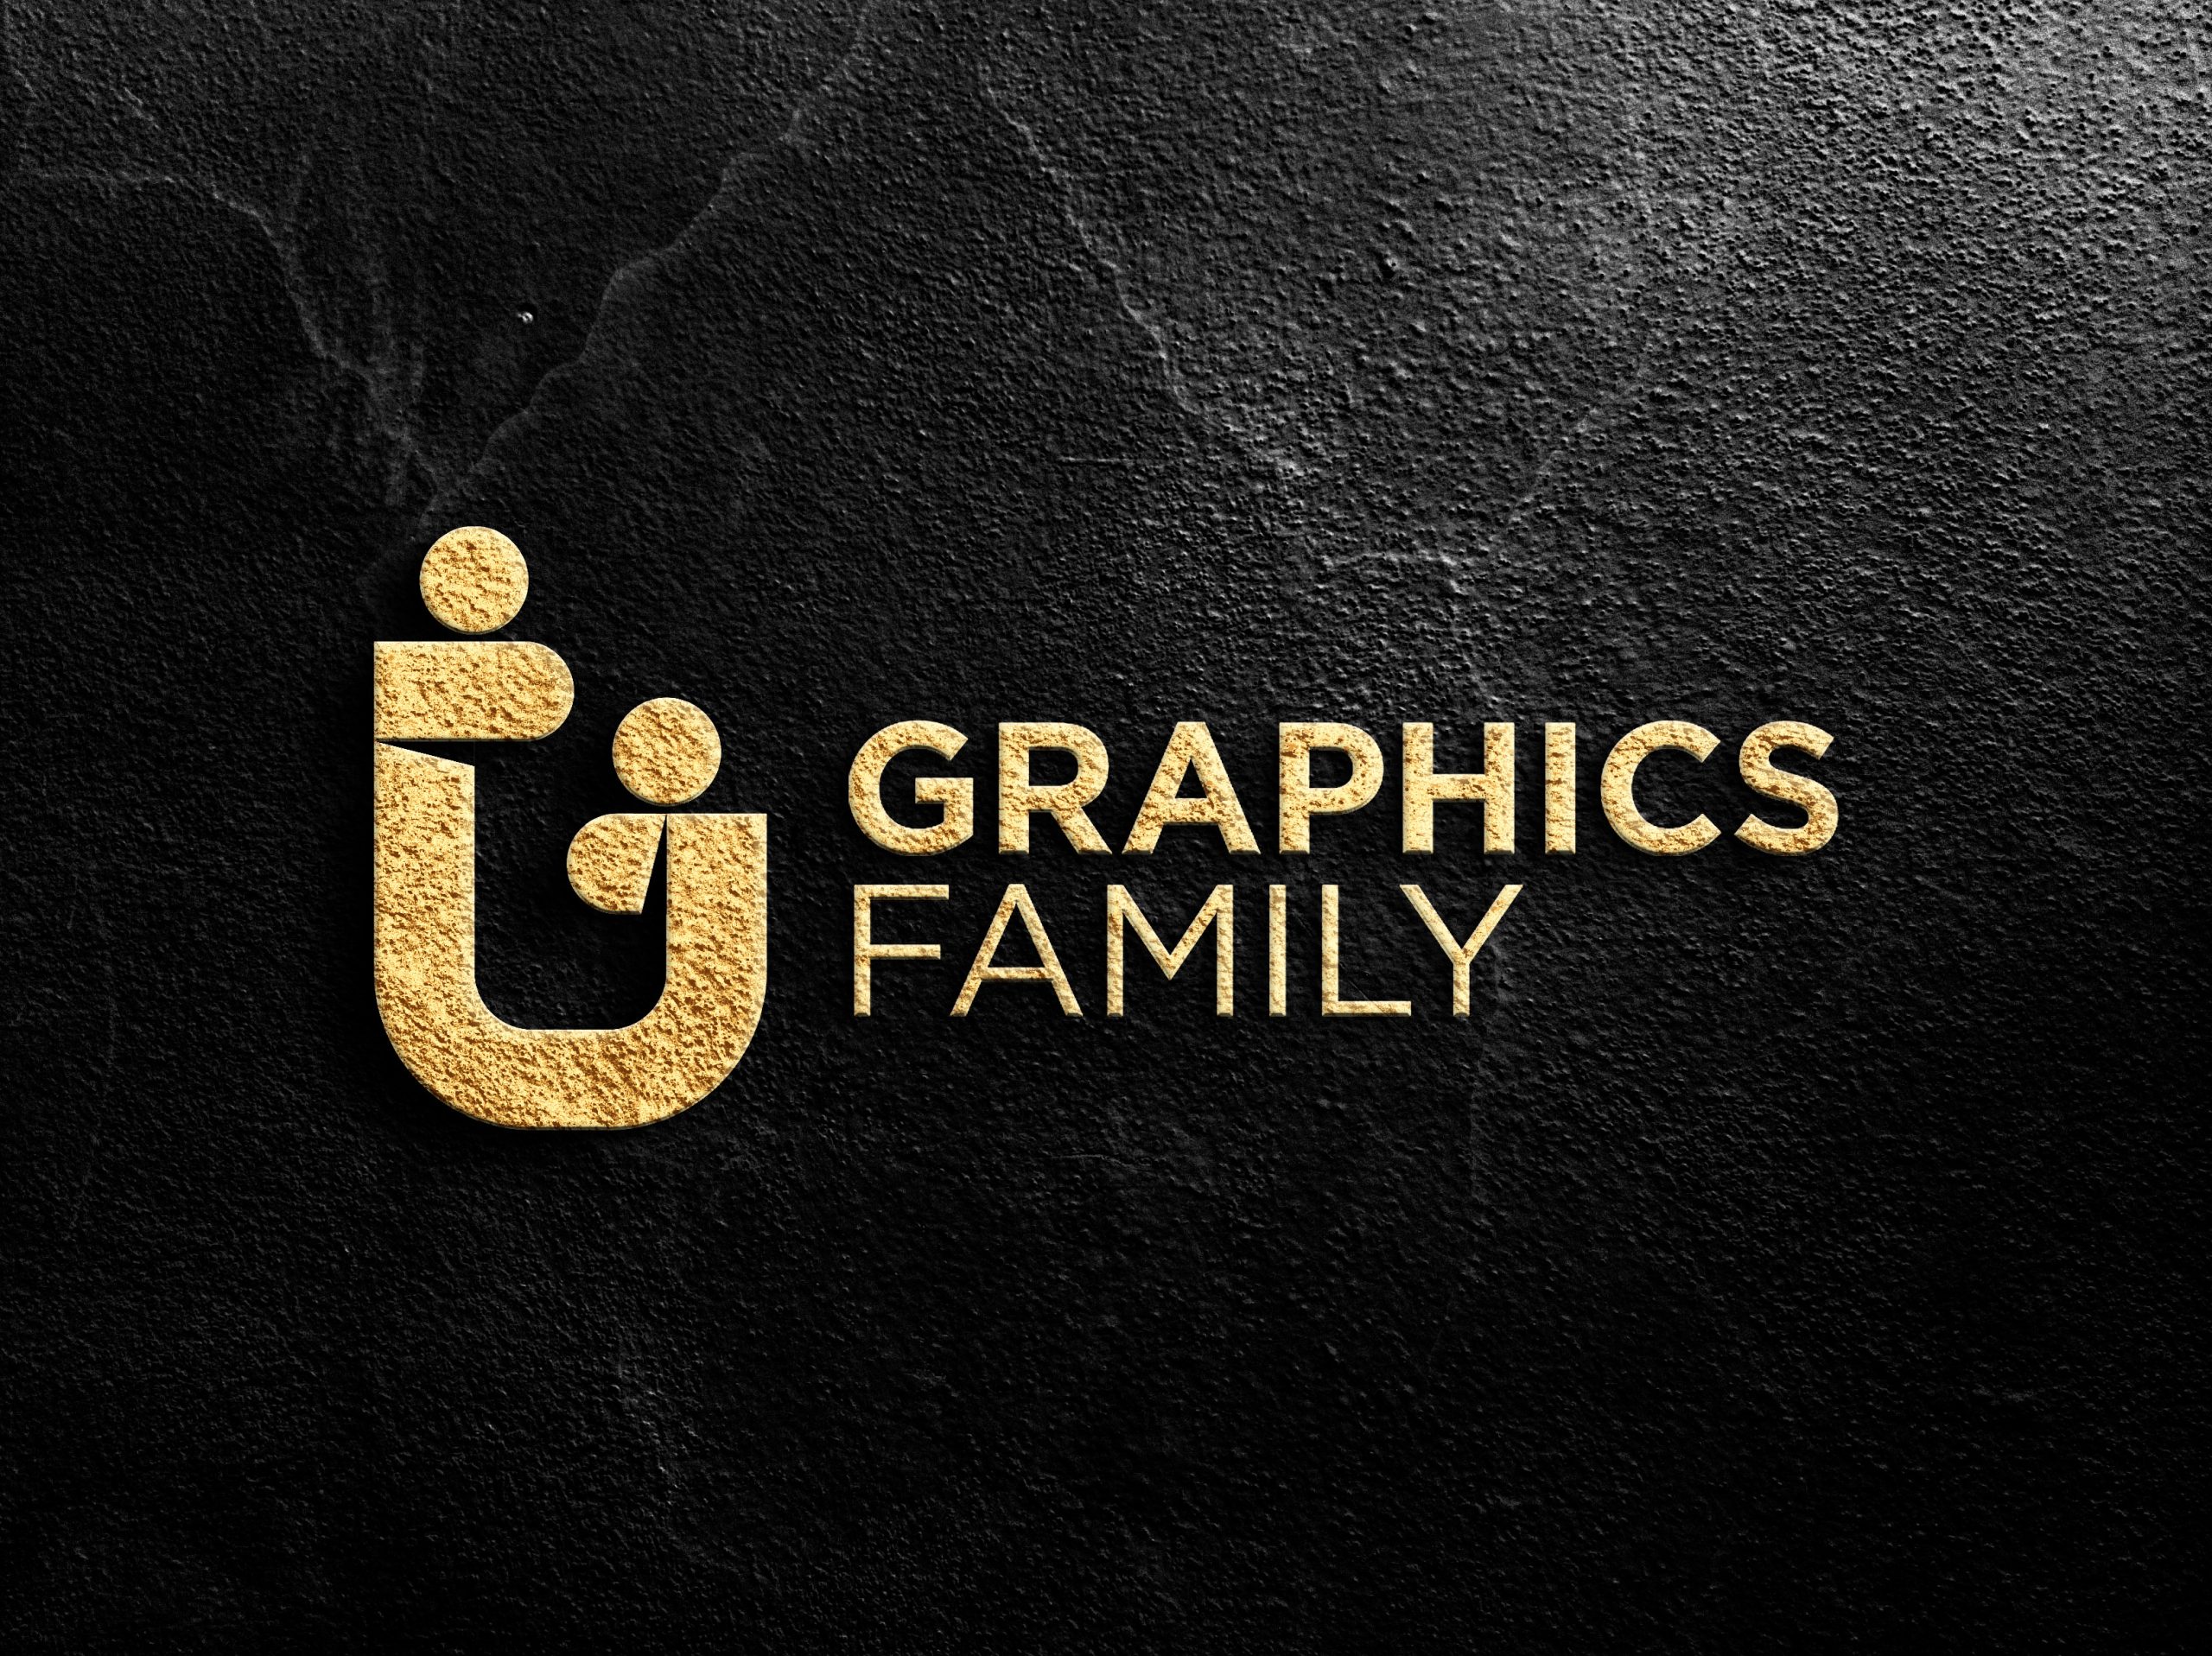 Realistic Black and Golden Logo Mockup